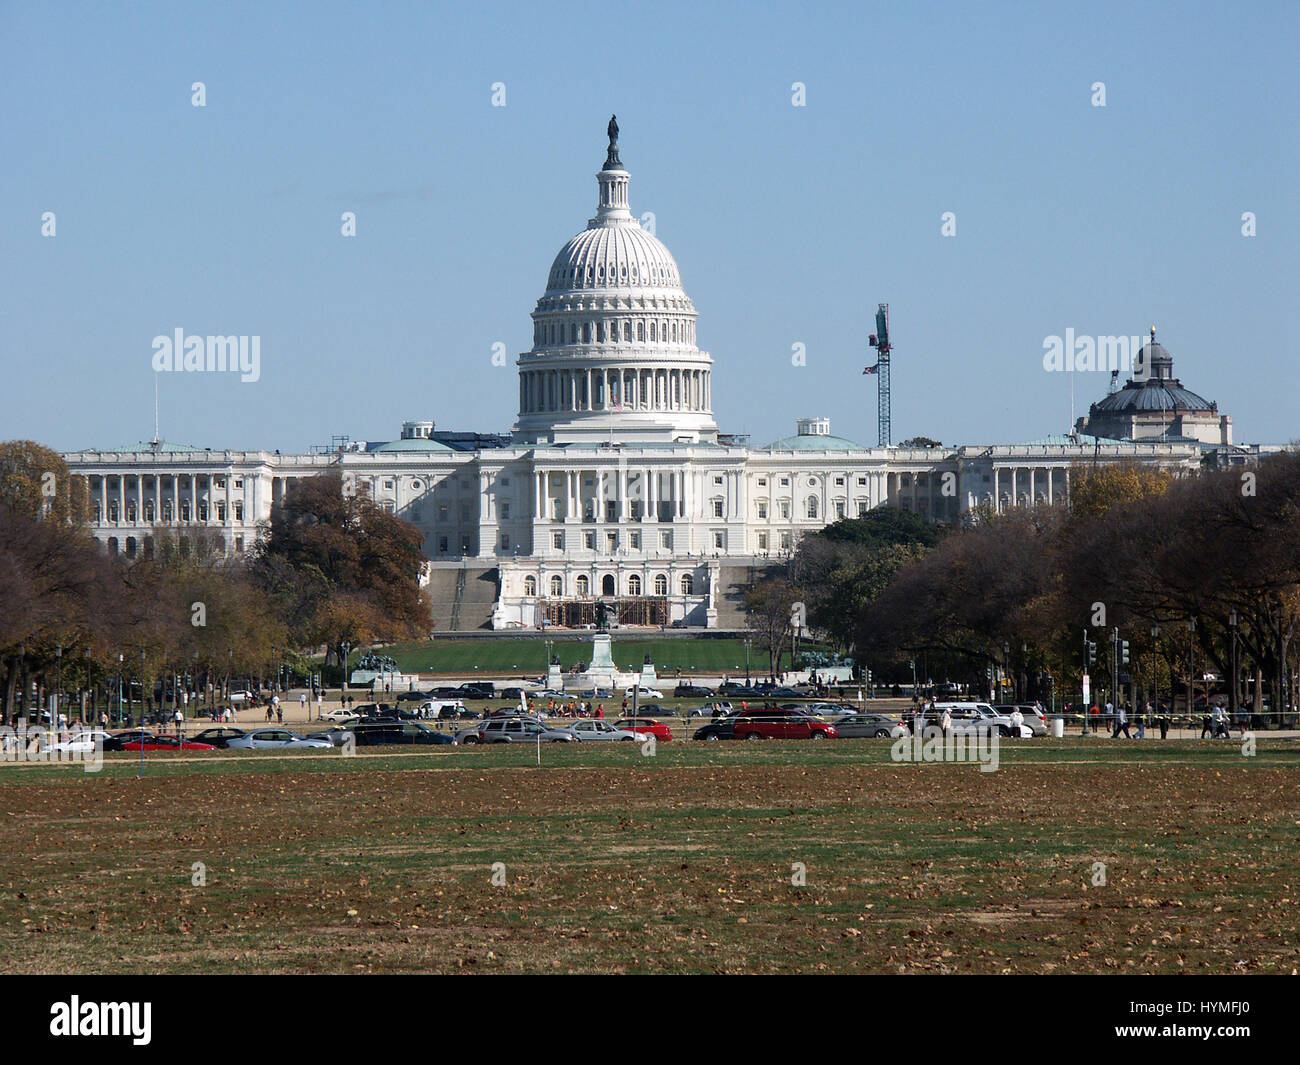 The US Capital Building in Washington D.C. Stock Photo